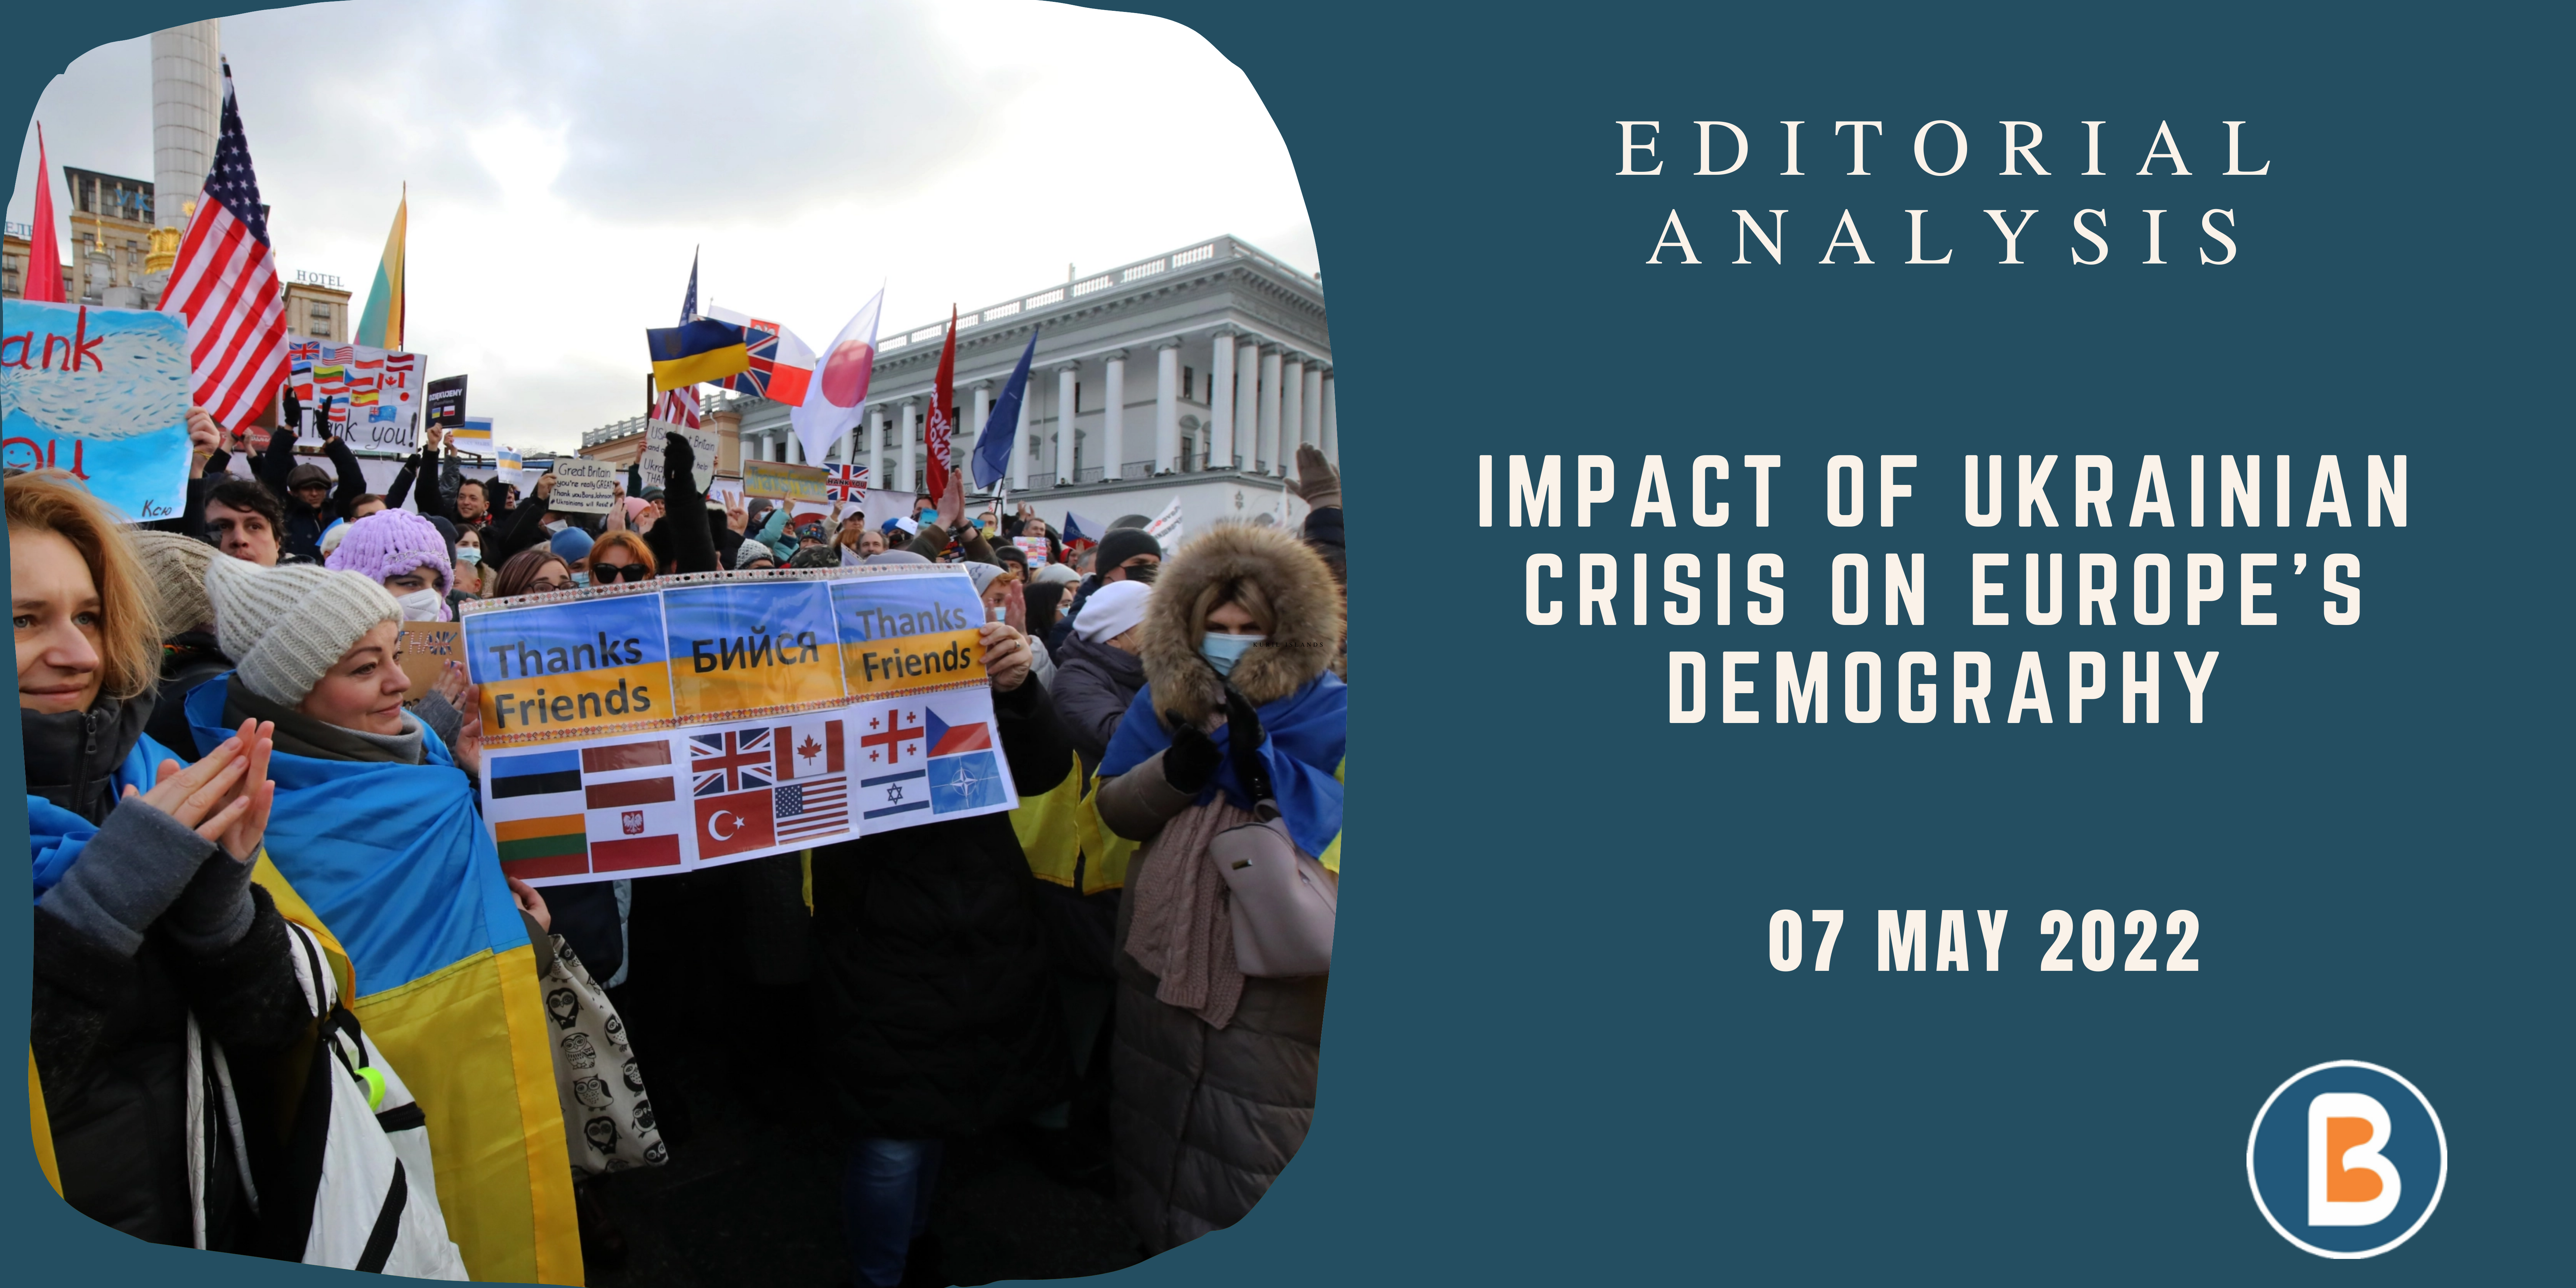 Editorial Analysis for UPSC - Impact of Ukrainian Crisis on Europe’s Demography